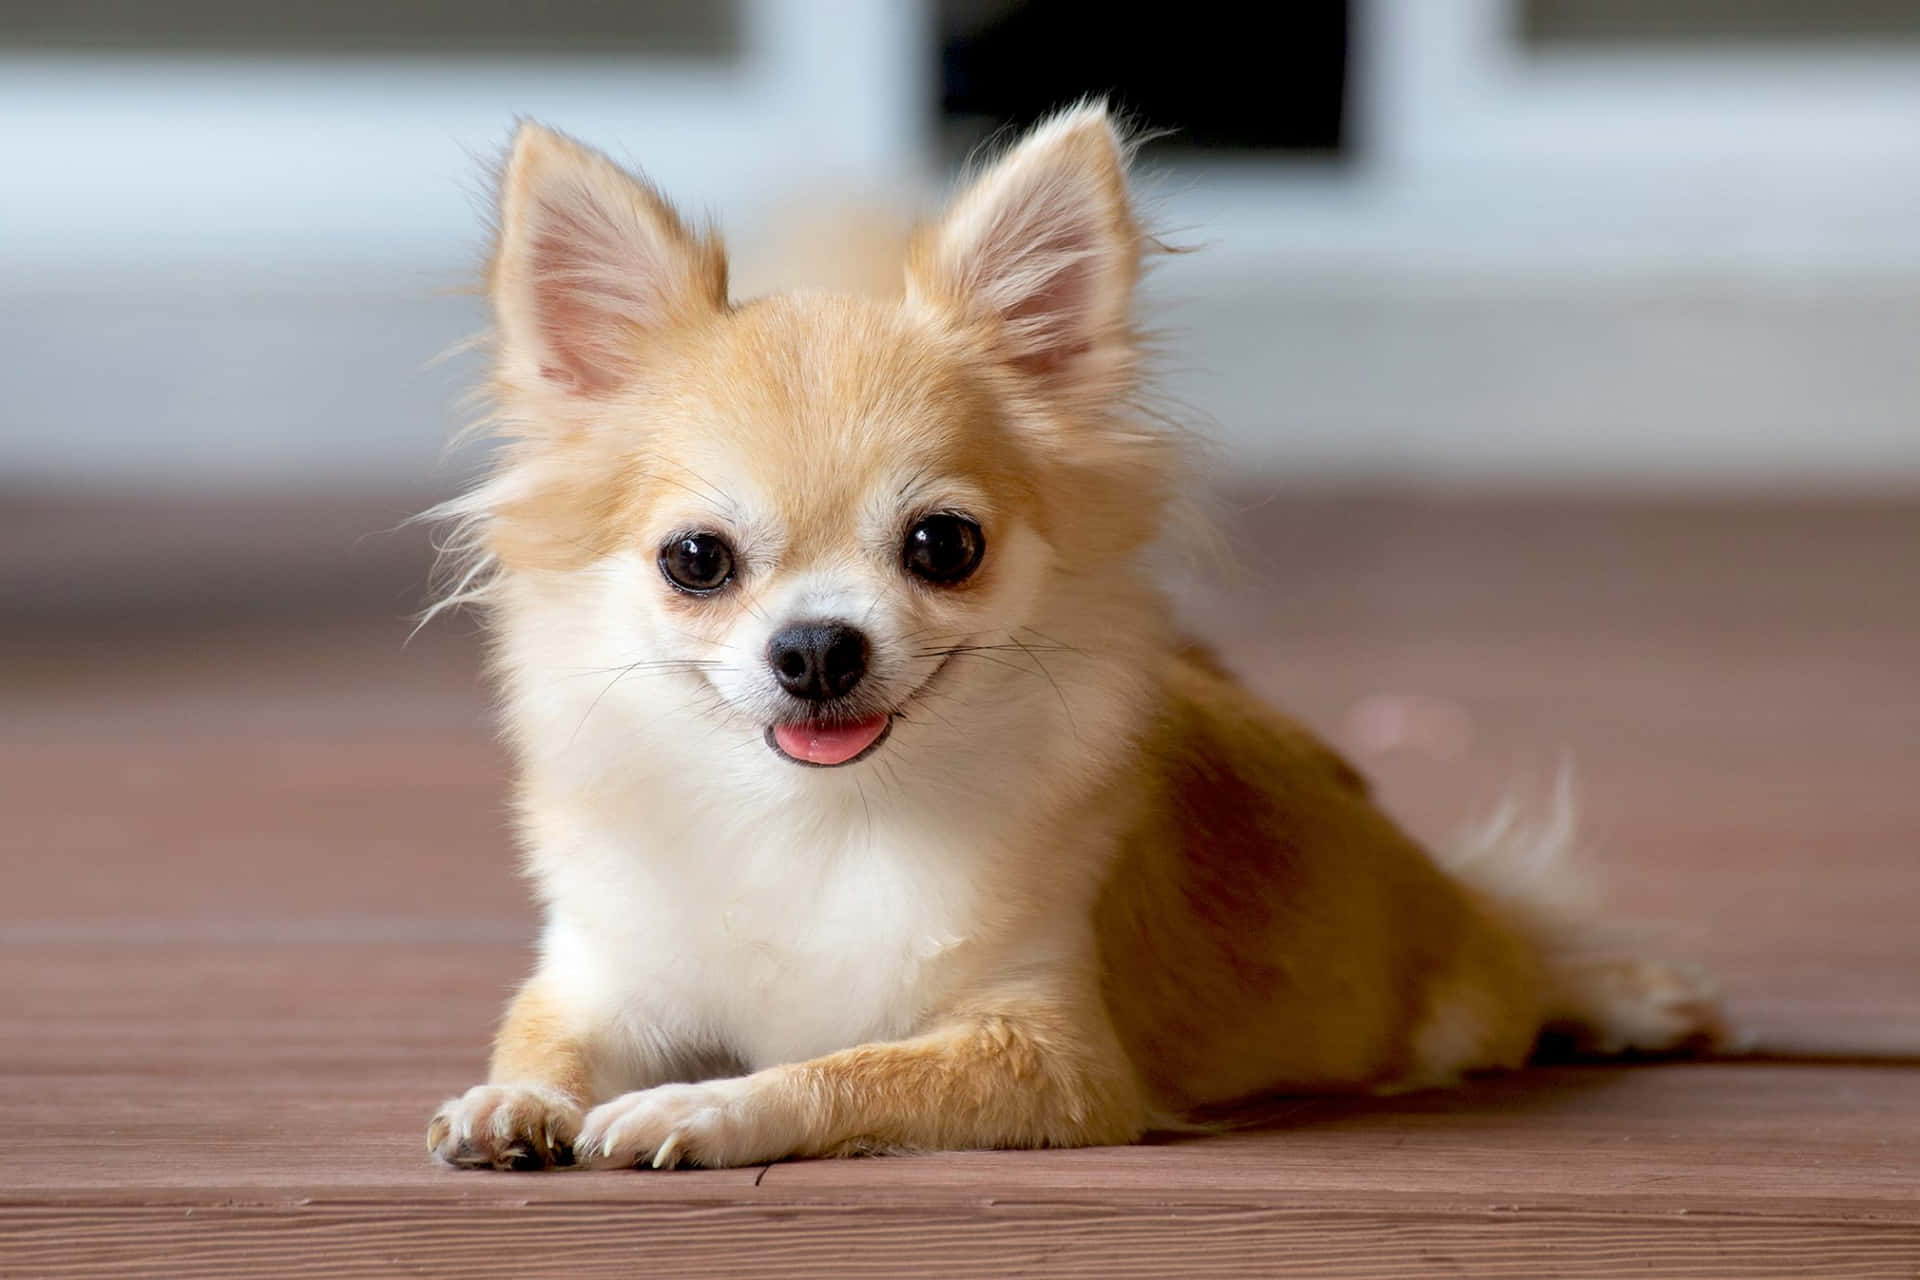 Captivating Chihuahua Enjoying a Serene Moment